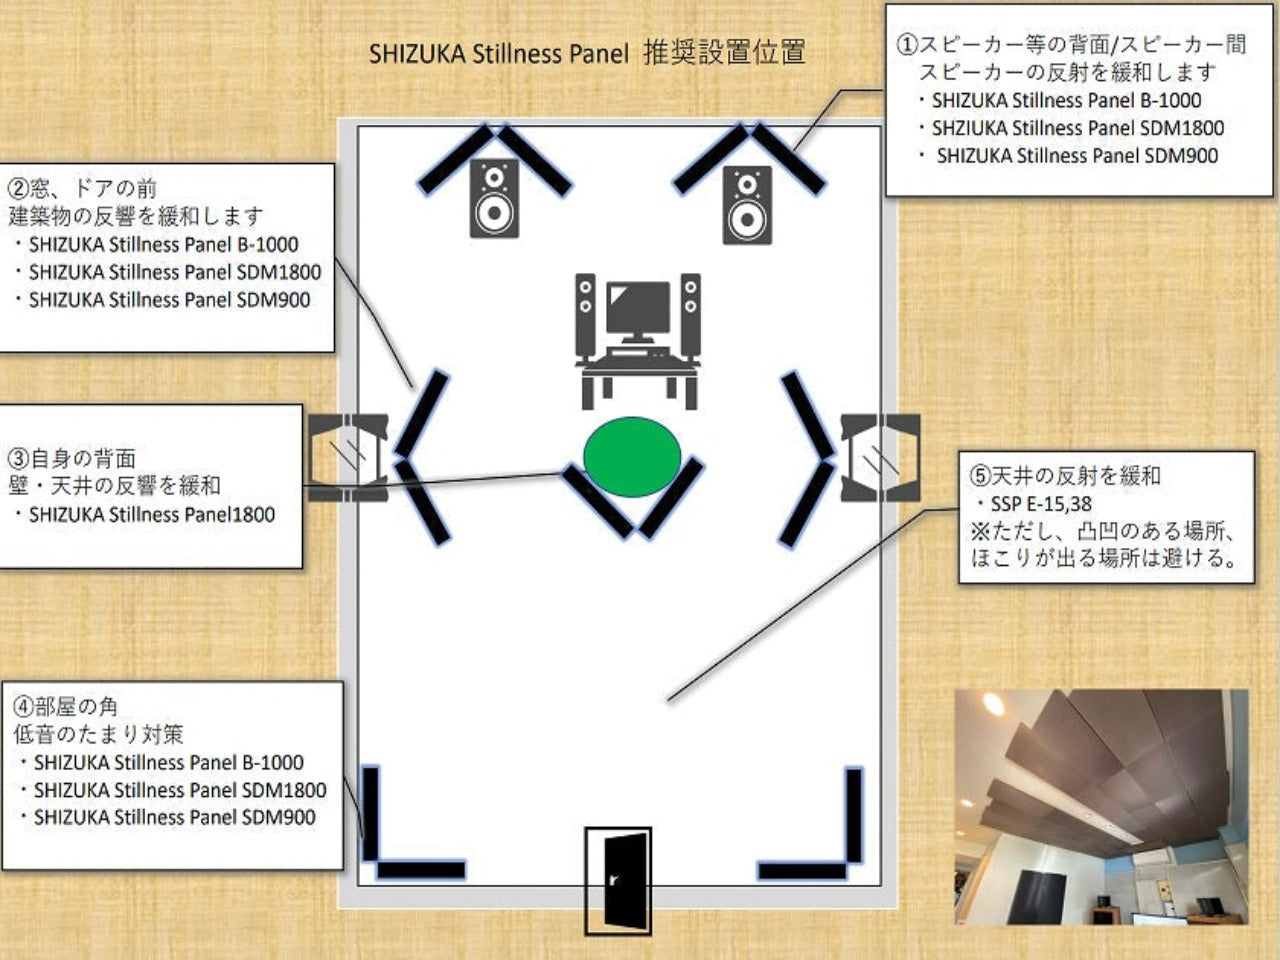 SHIZUKA Stillness Panel SDM-900 (red 高さ900㎜) – サイレント